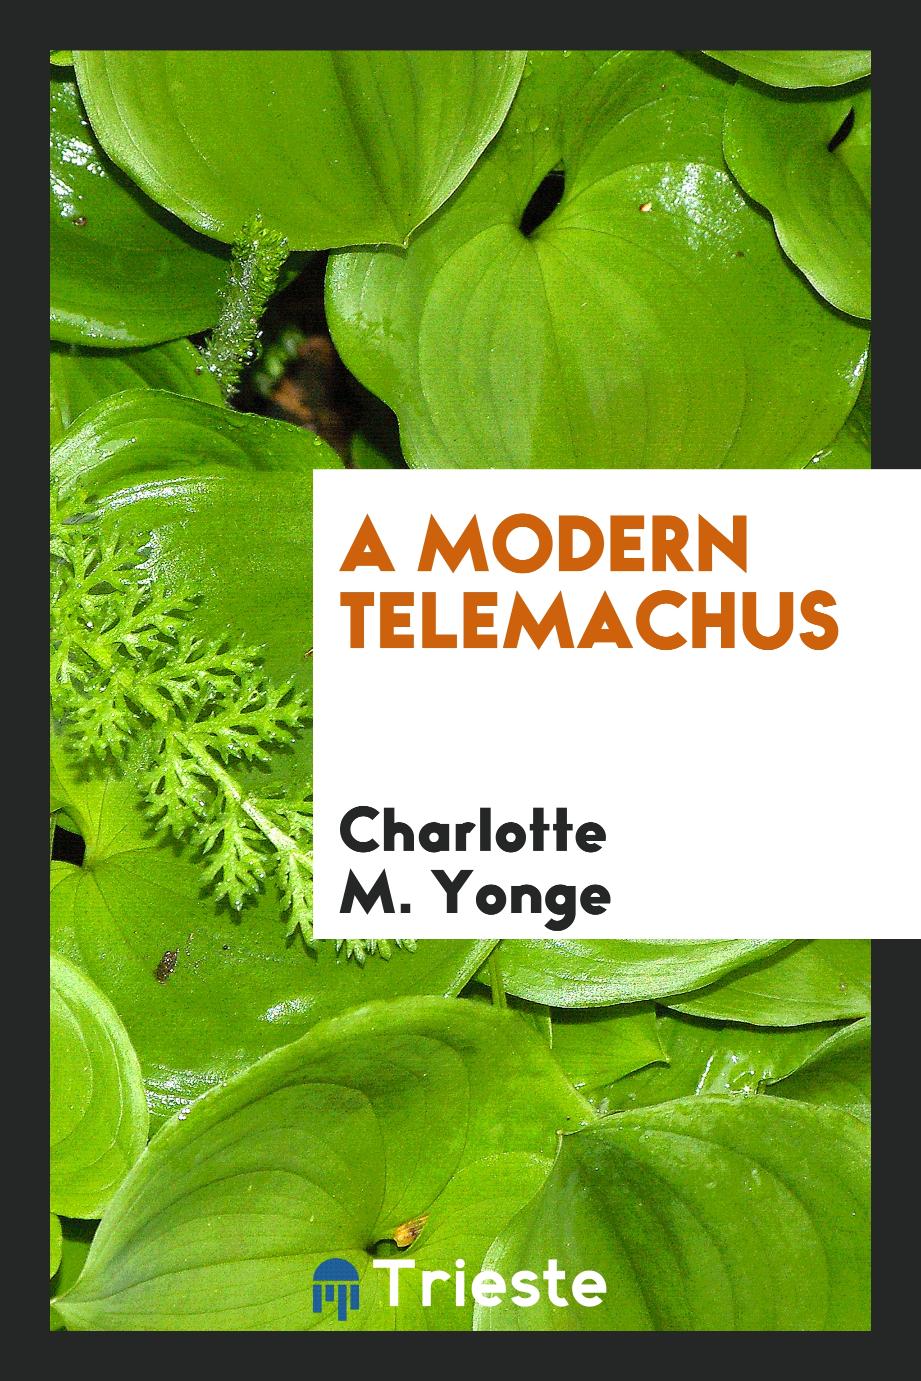 A modern Telemachus